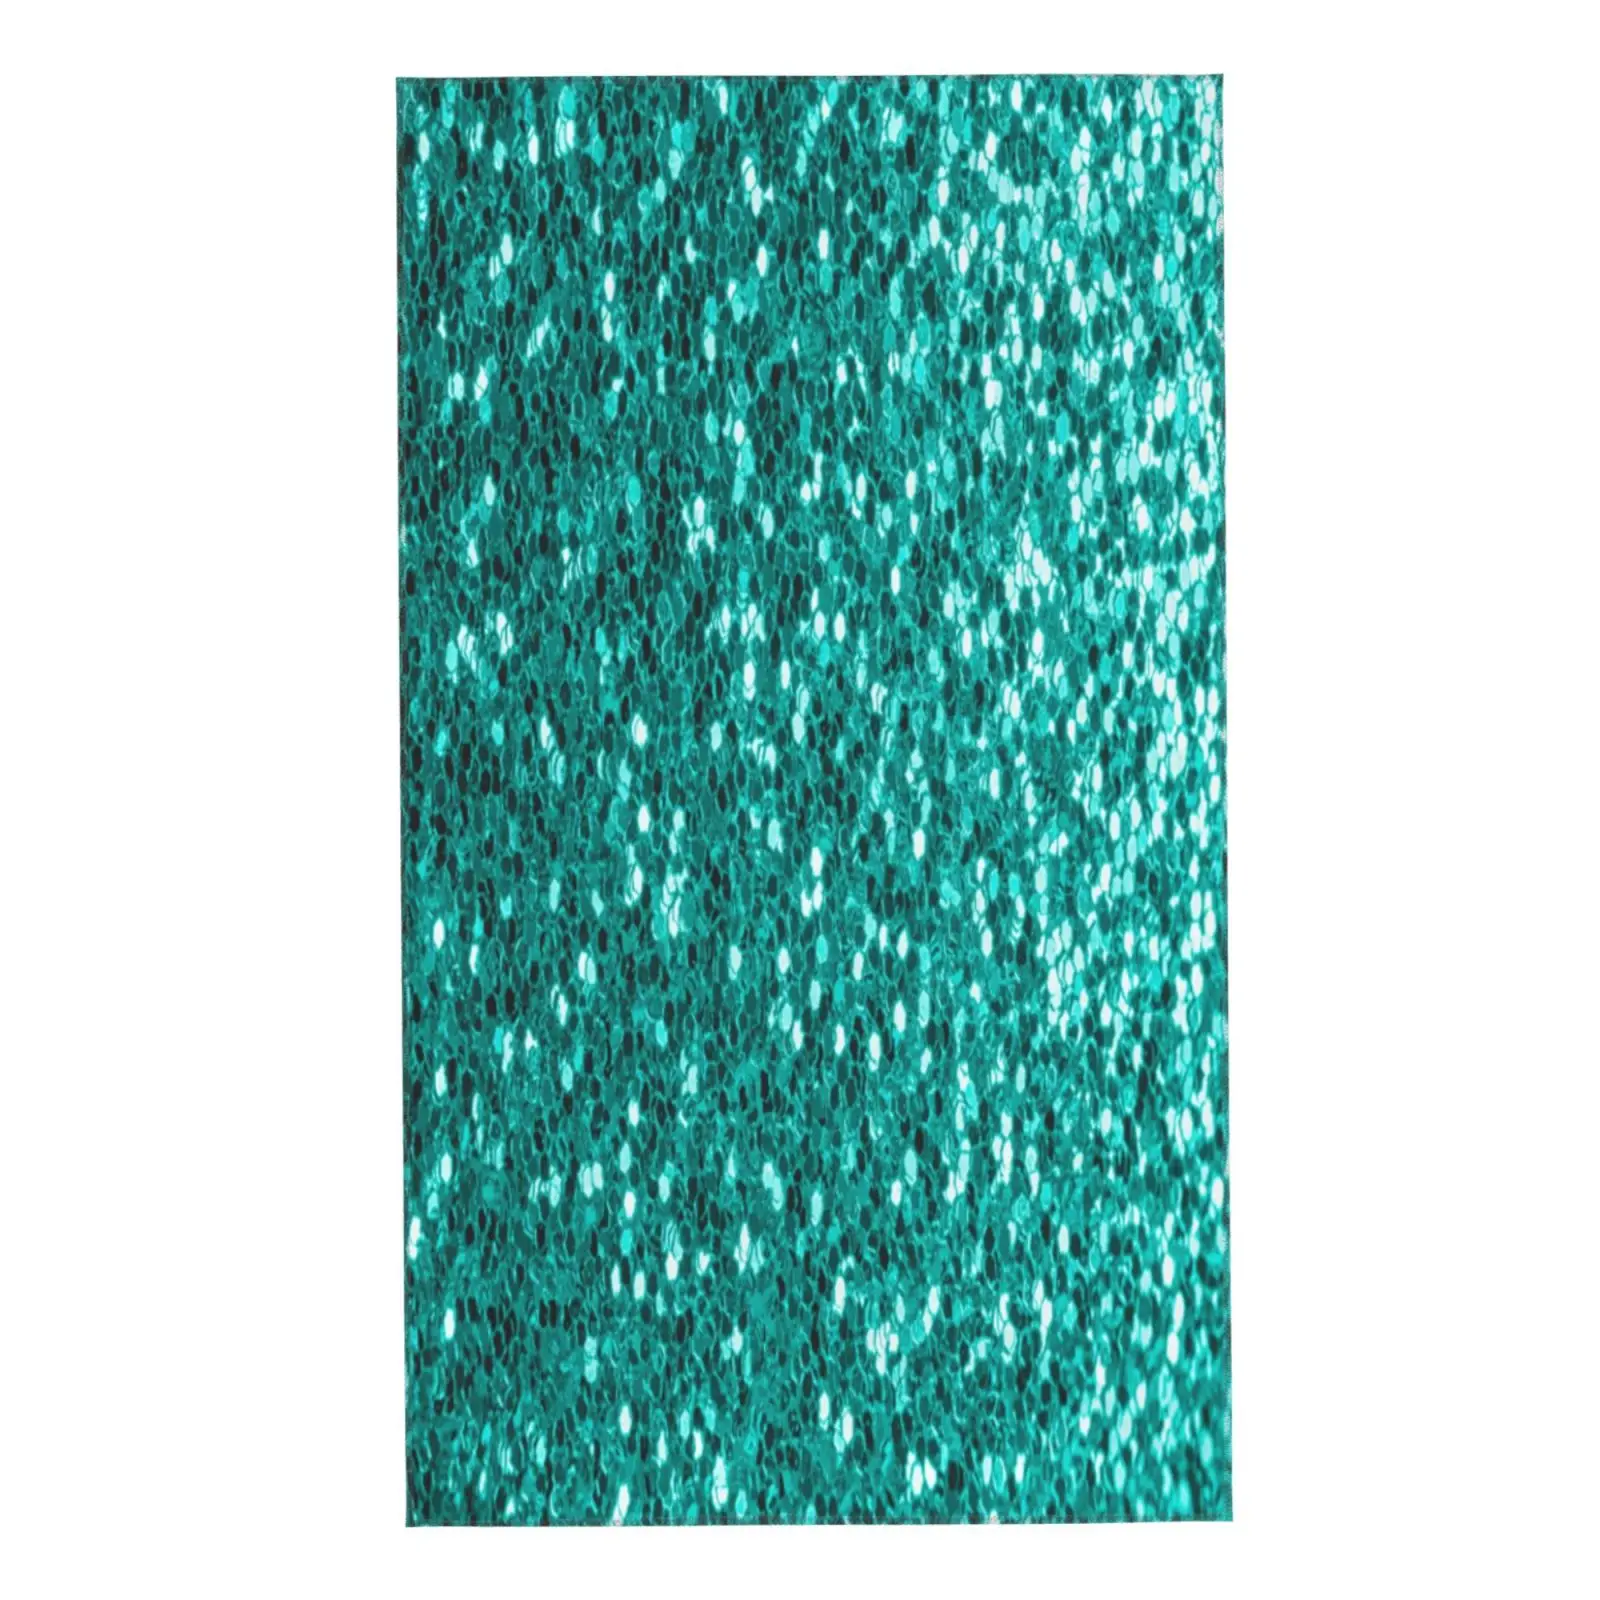 

Face Towel Bright turquoise sparkles glittering beautiful Soft Bath Hotel Spa Gym Sport Hand Towelstoallas baño ハンドタオル